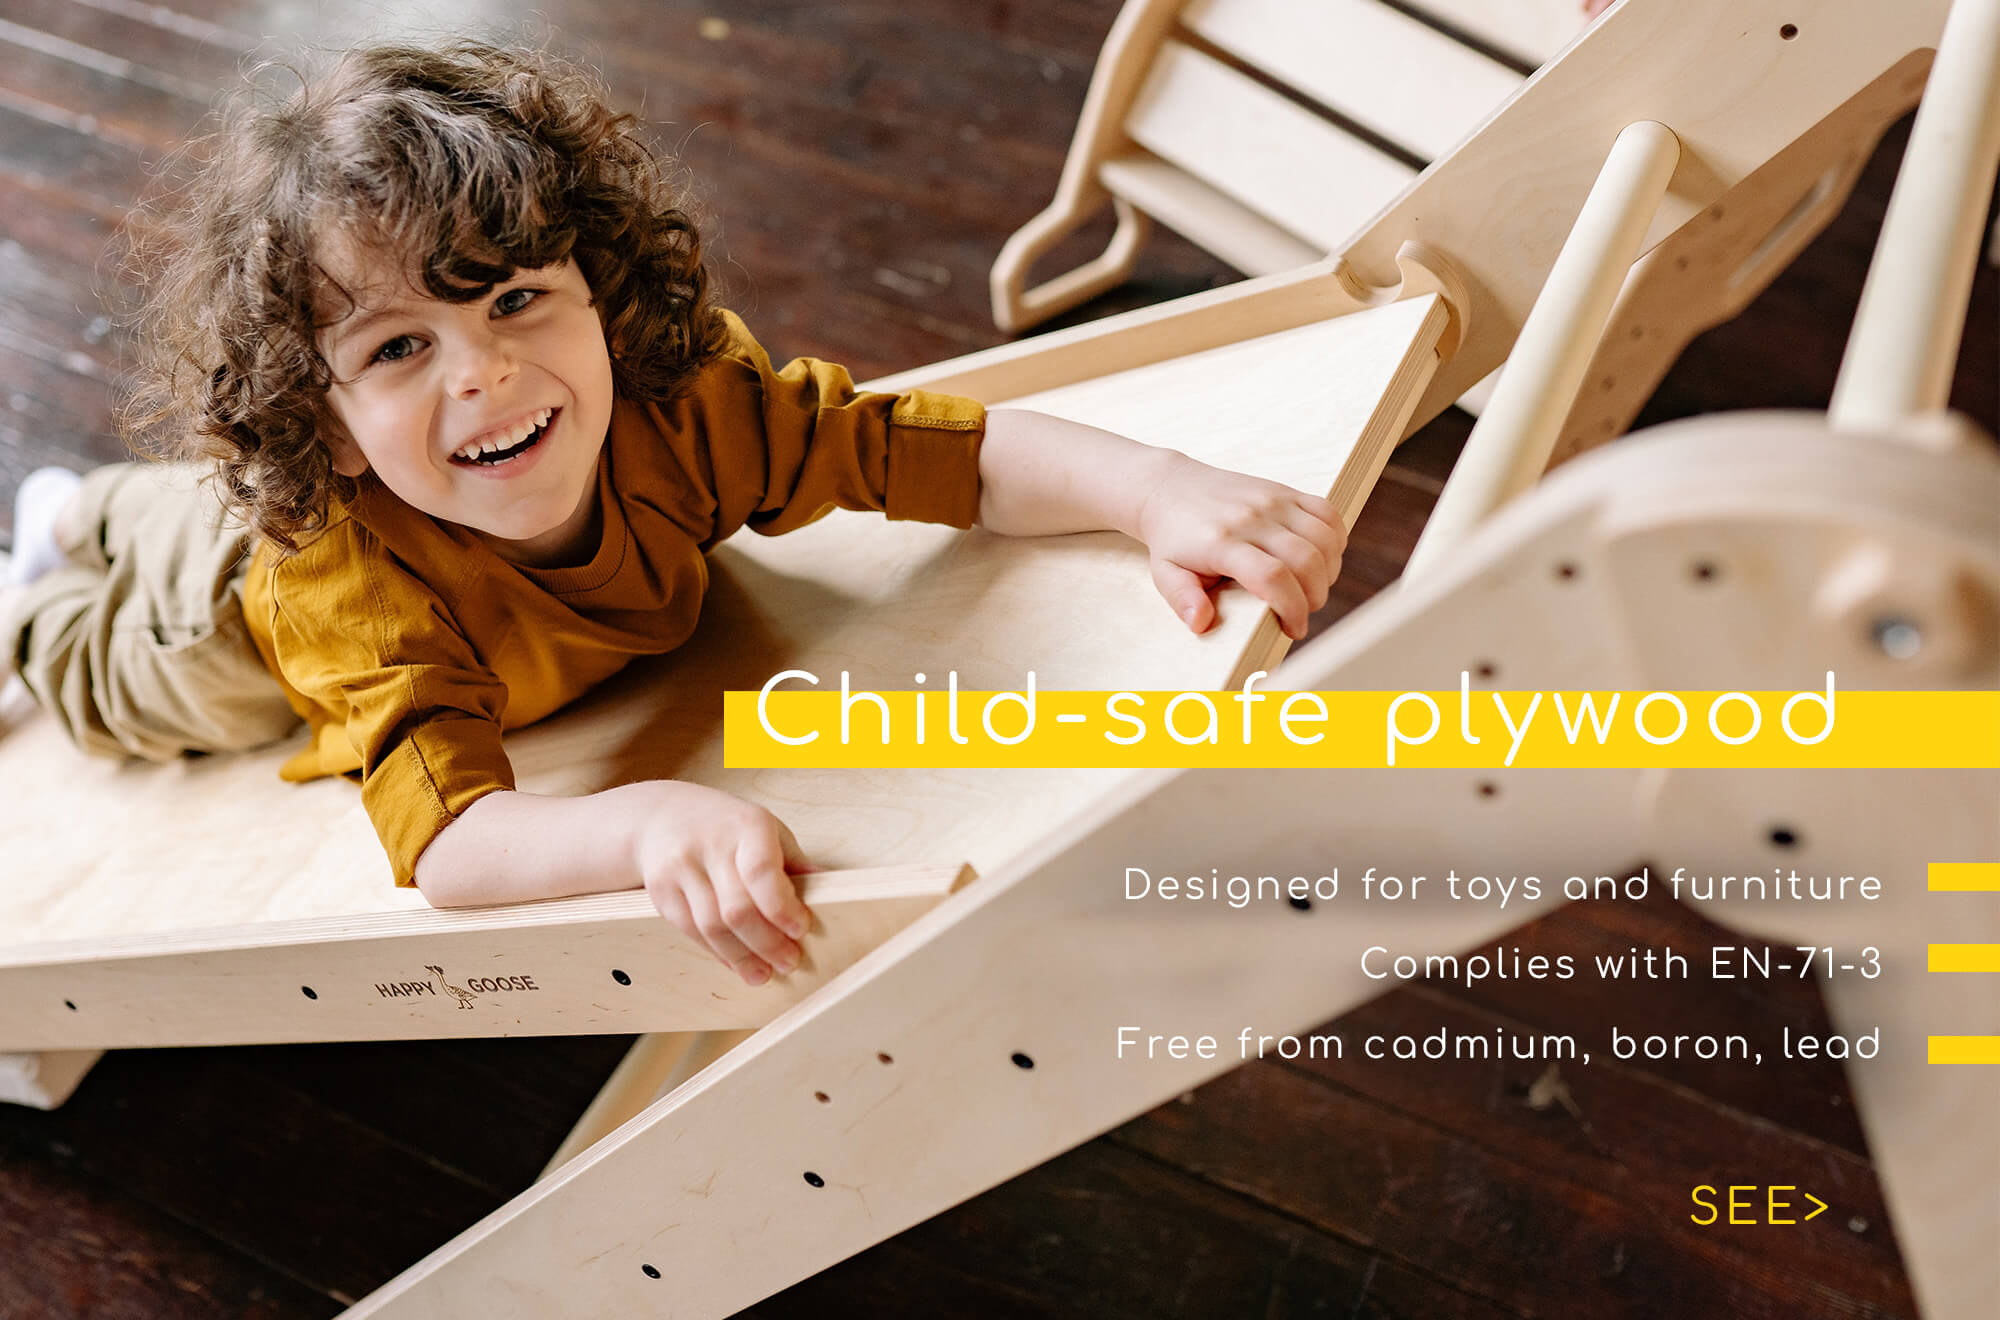 child-safe plywwod